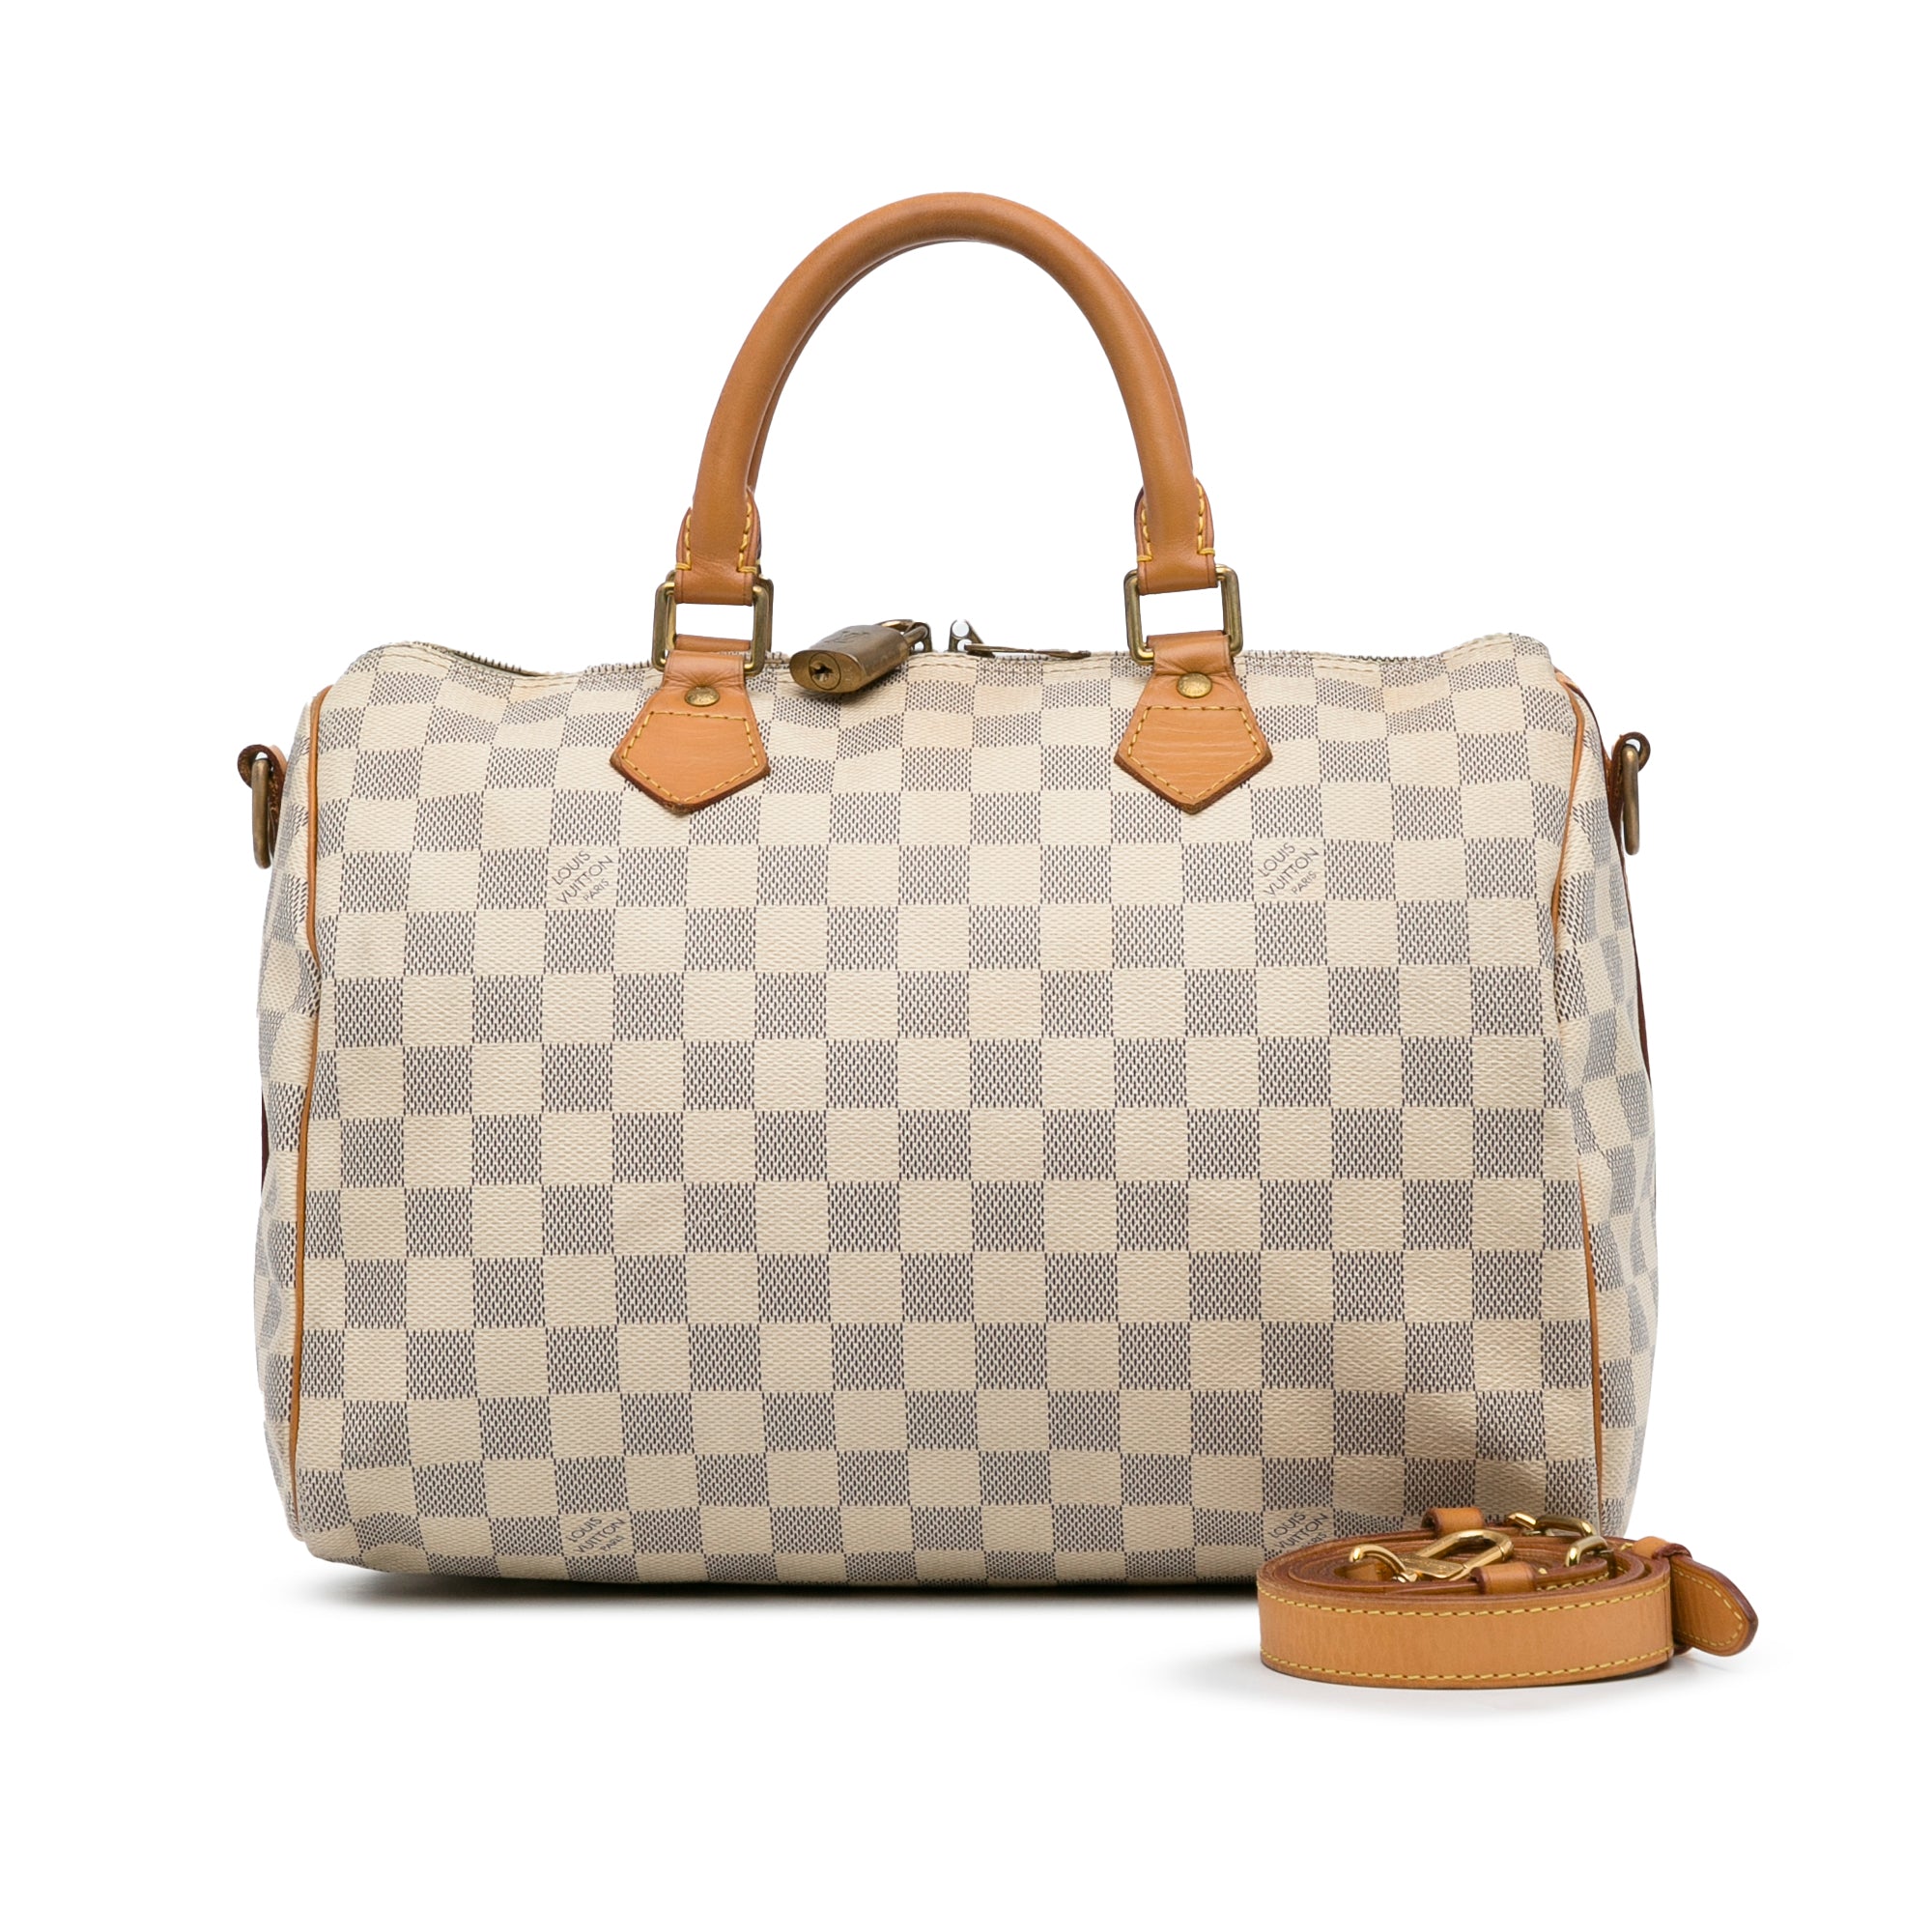 Louis Vuitton Speedy Bandouliere 30 in Damier Ebene Handbag - Authentic Pre-Owned Designer Handbags